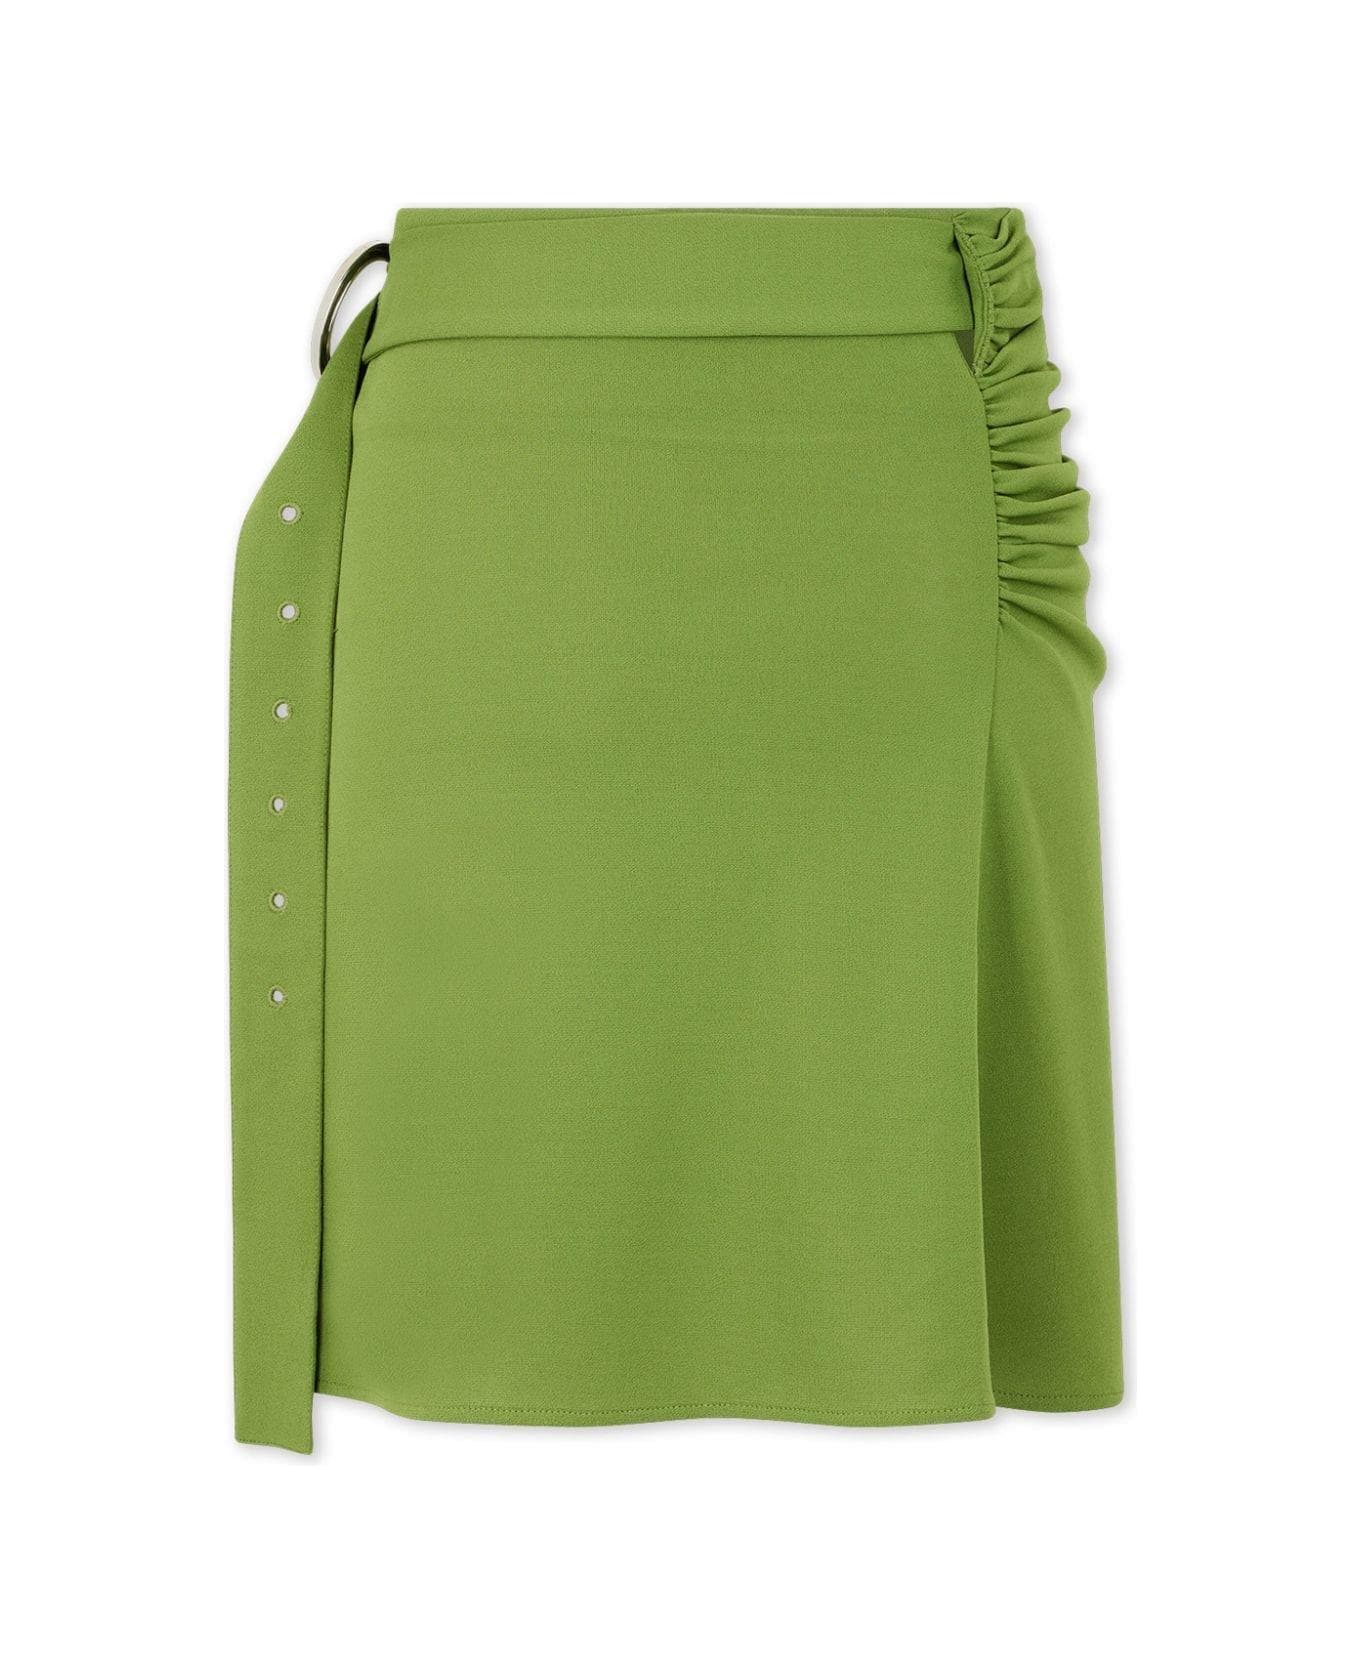 Paco Rabanne Ruched Detailed Belted Mini Skirt - Neo kaki スカート